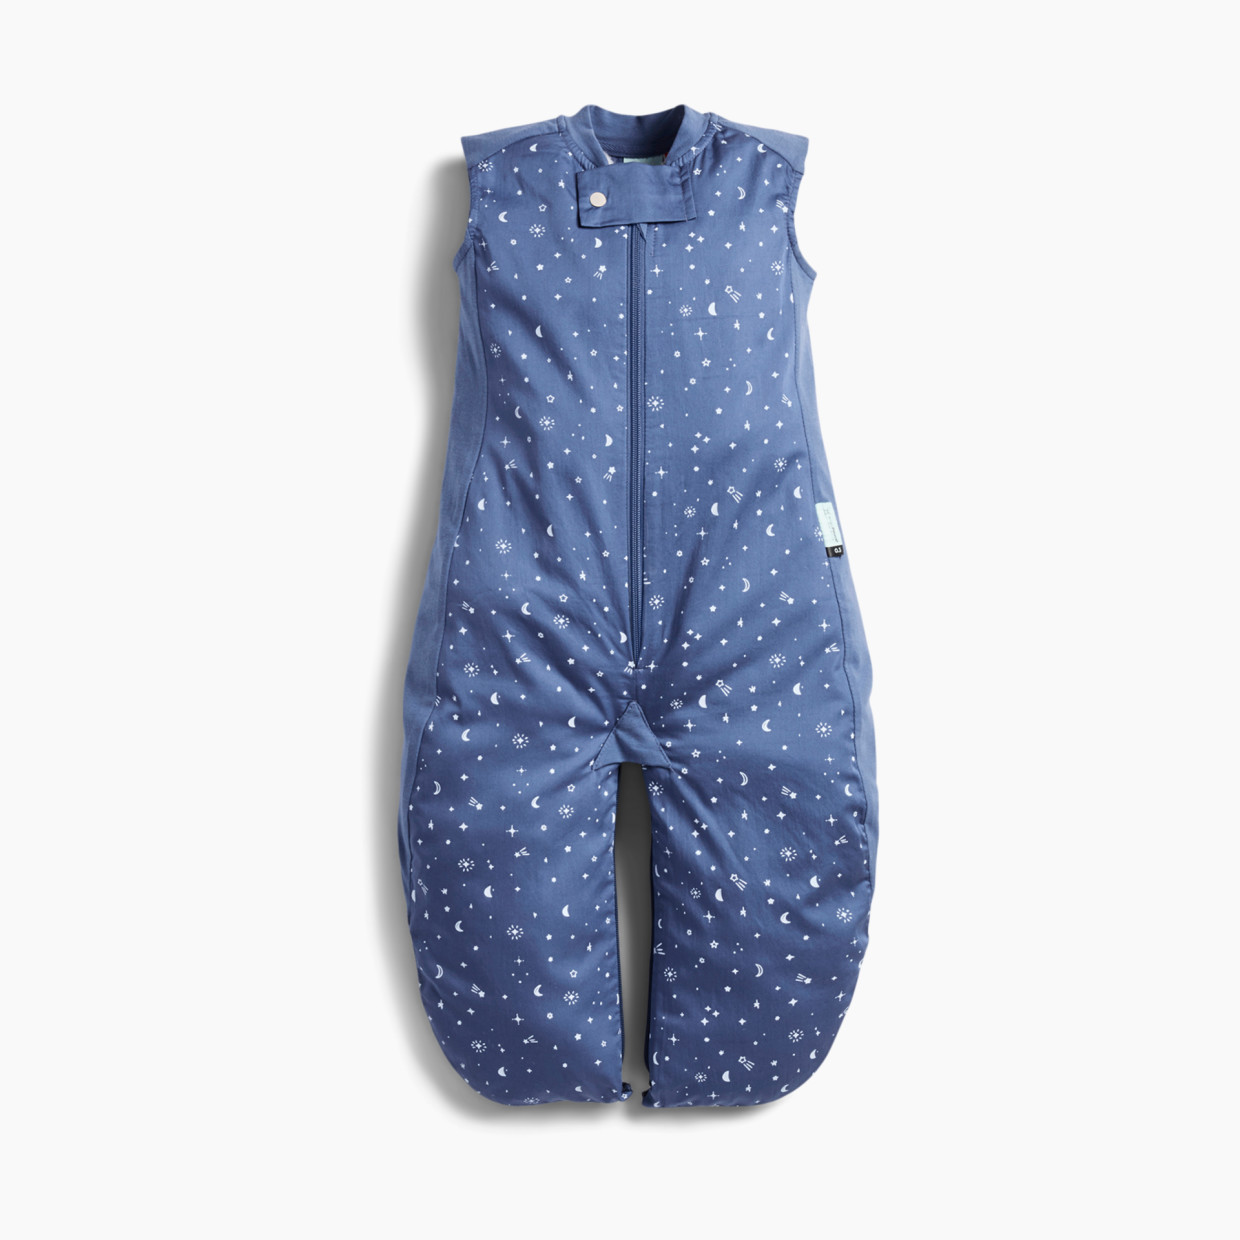 ergoPouch Sleep Suit Bag 0.3 TOG - Night Sky, 8-24 Months.